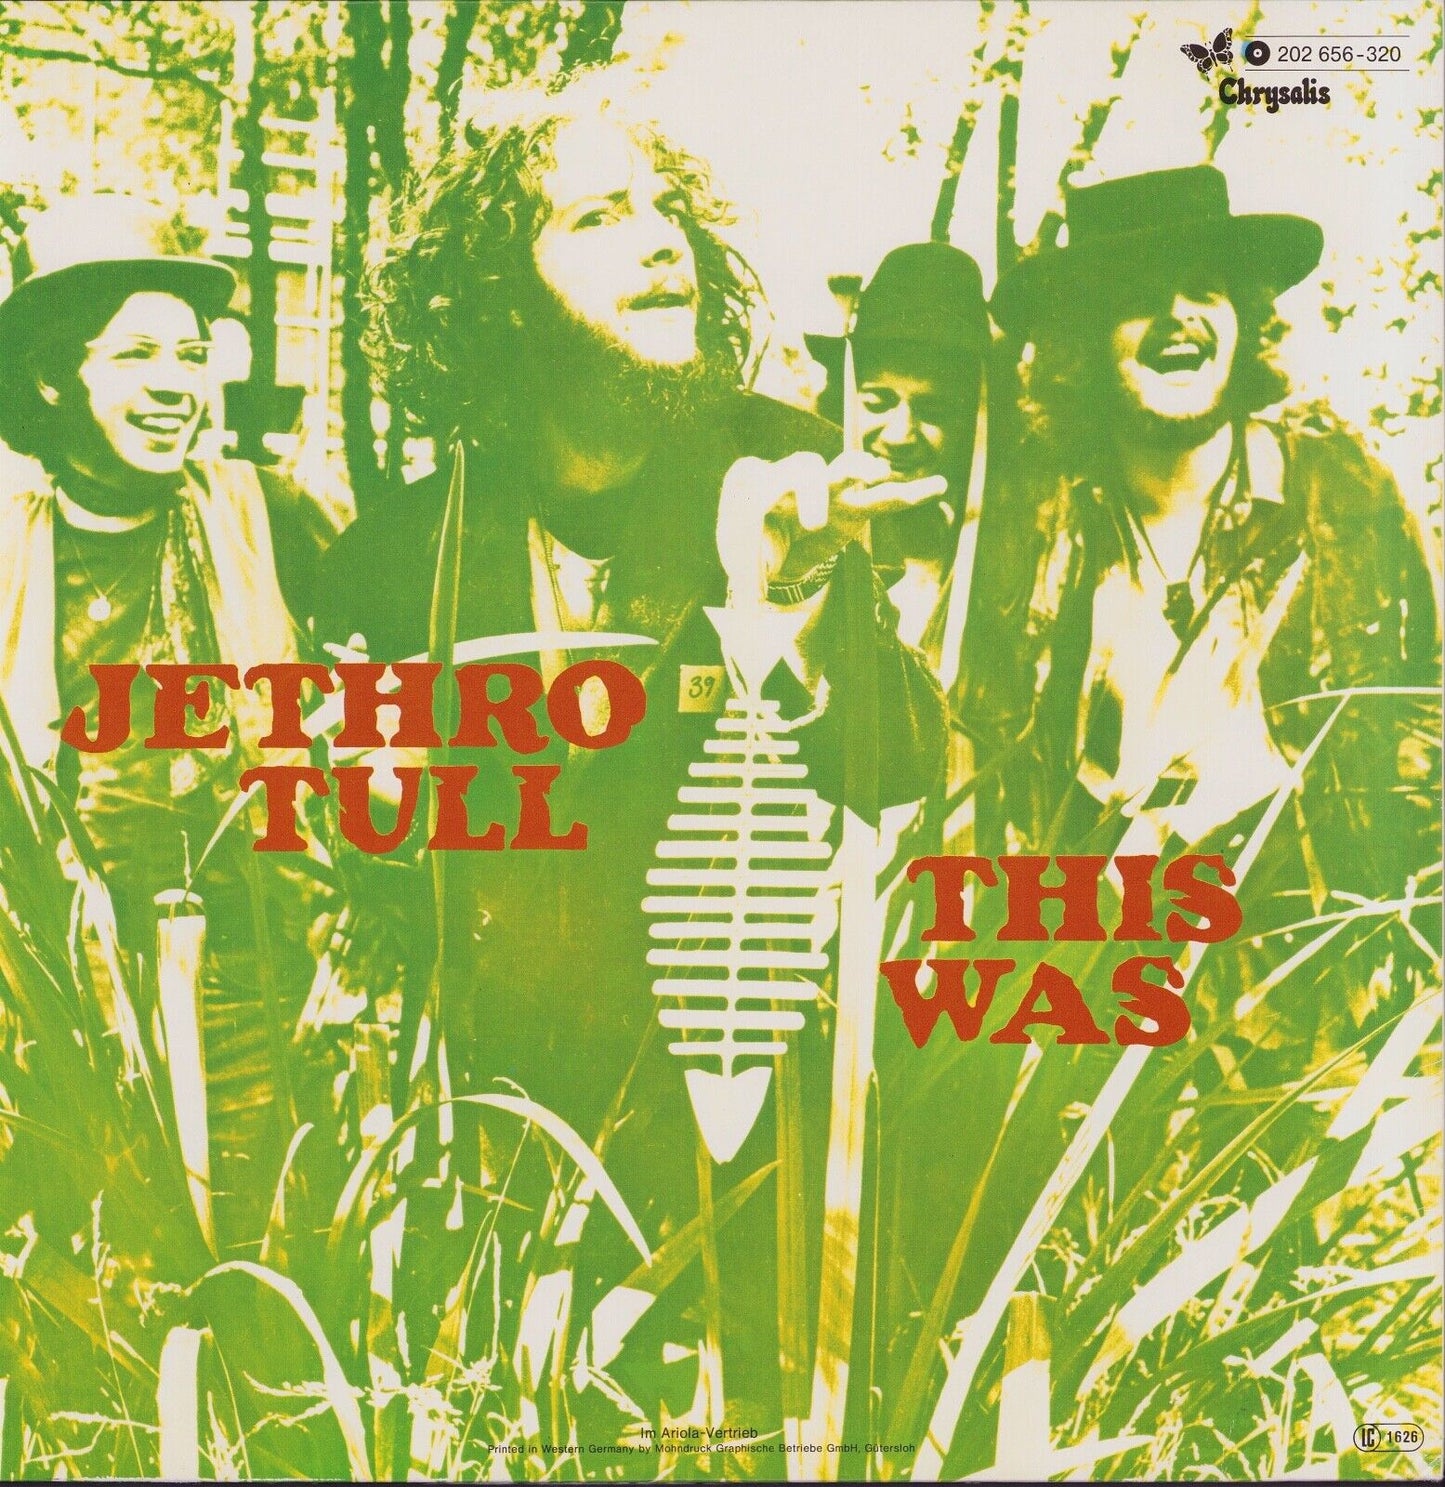 Jethro Tull - This Was Vinyl LP